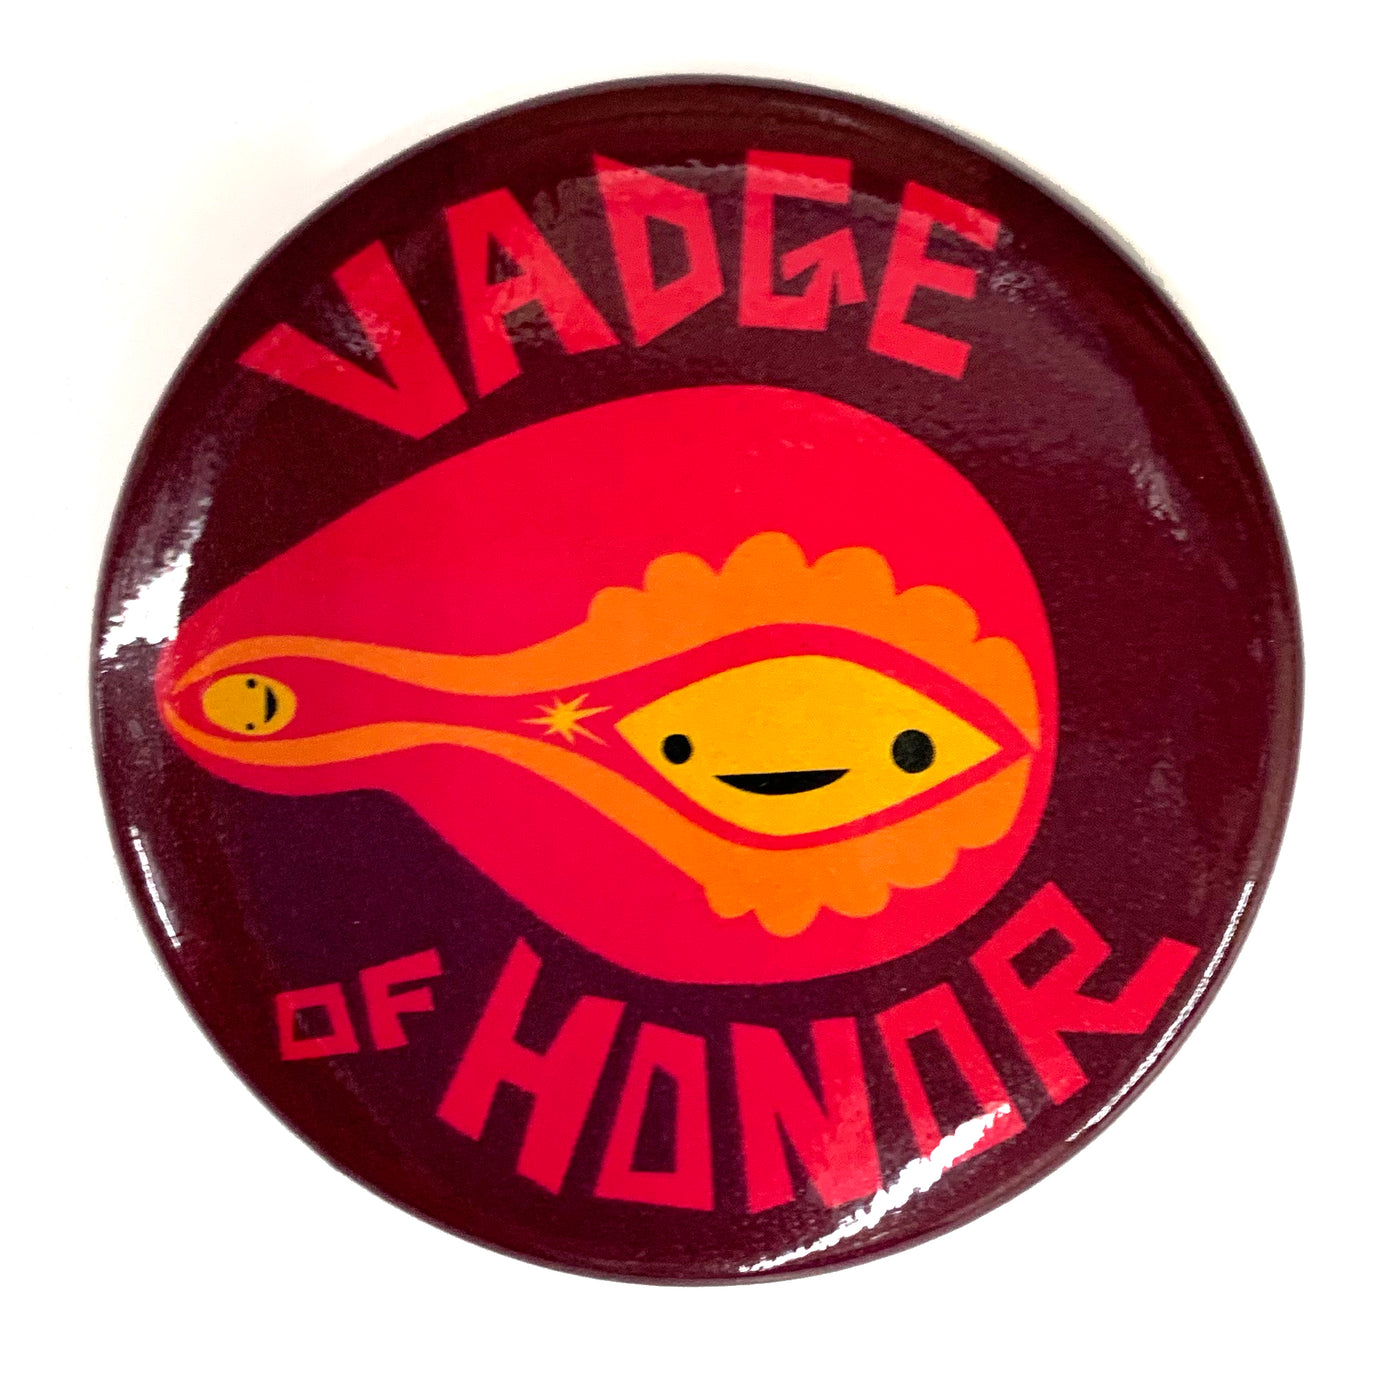 Vadge of Honor Magnet - Maroon/Hot Pink/Orange - I Heart Guts